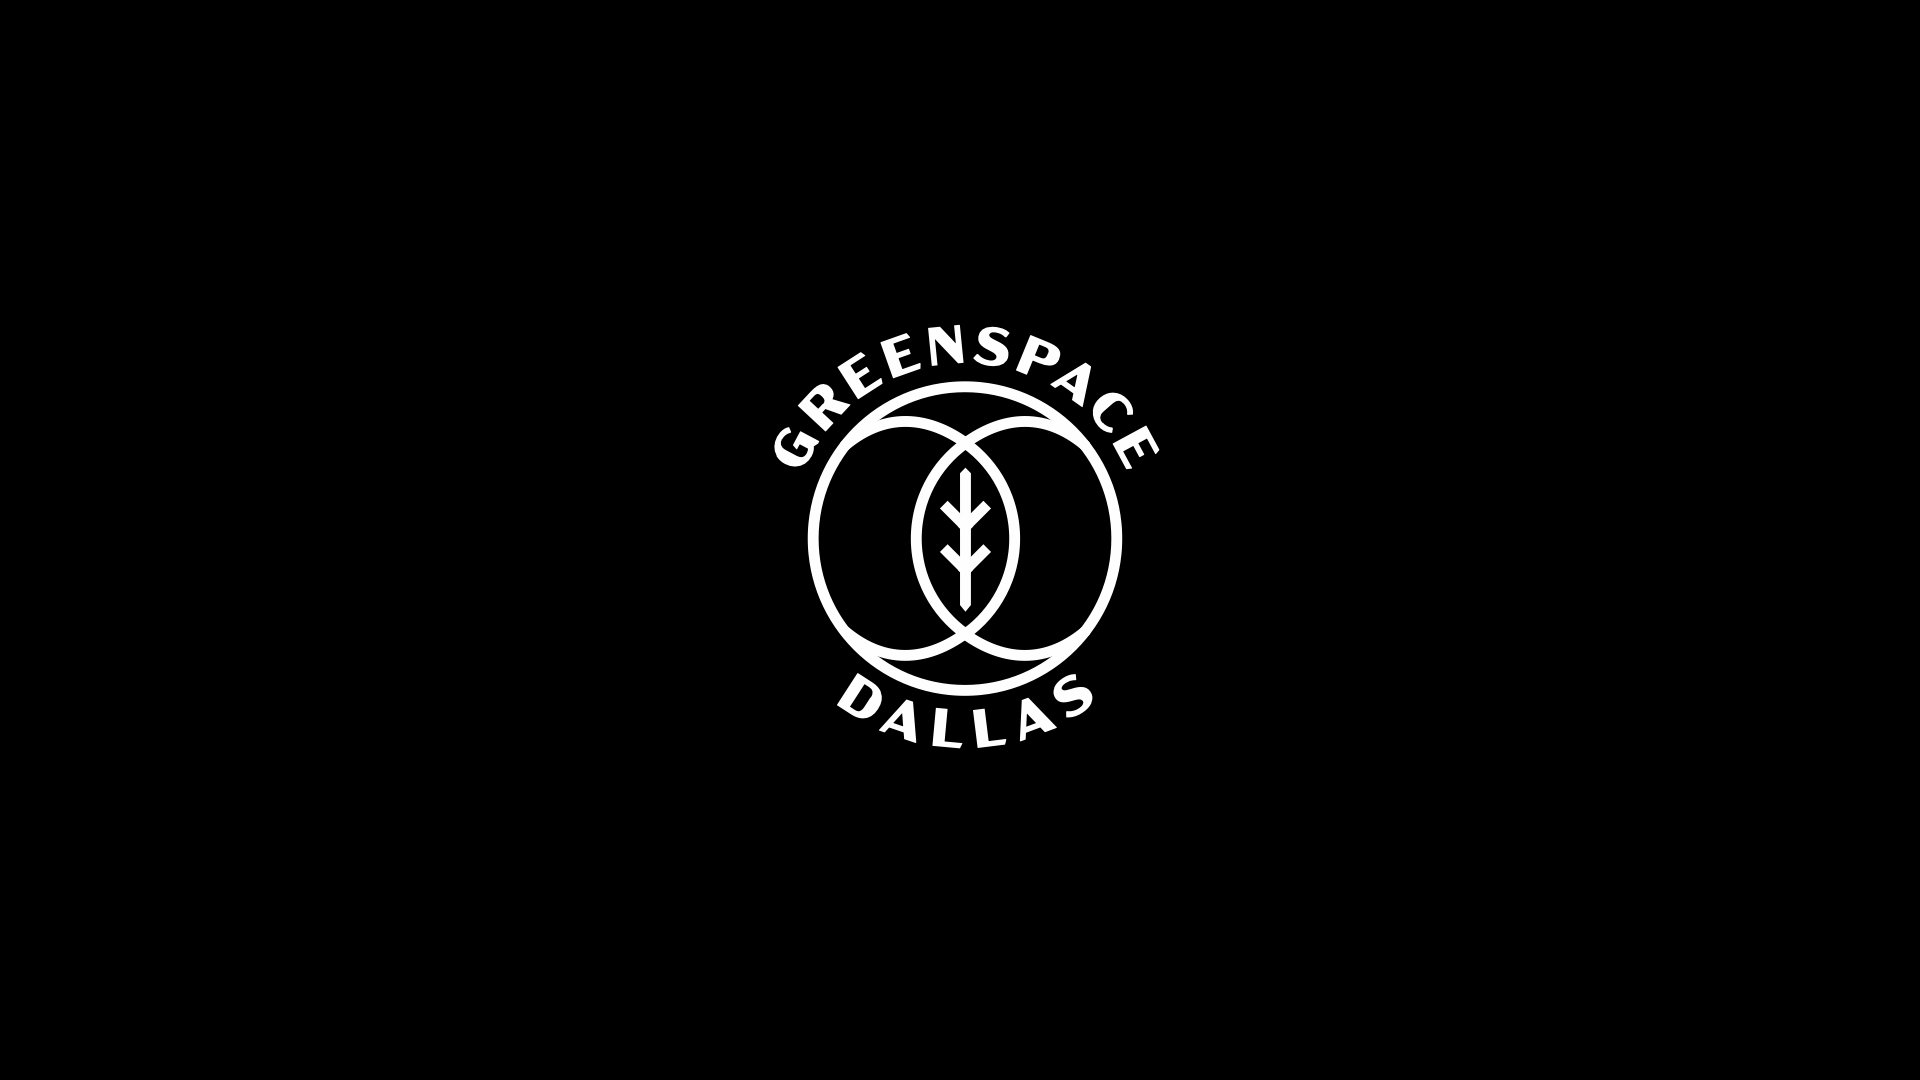 Greenspace Dallas R1A copy.004.jpeg